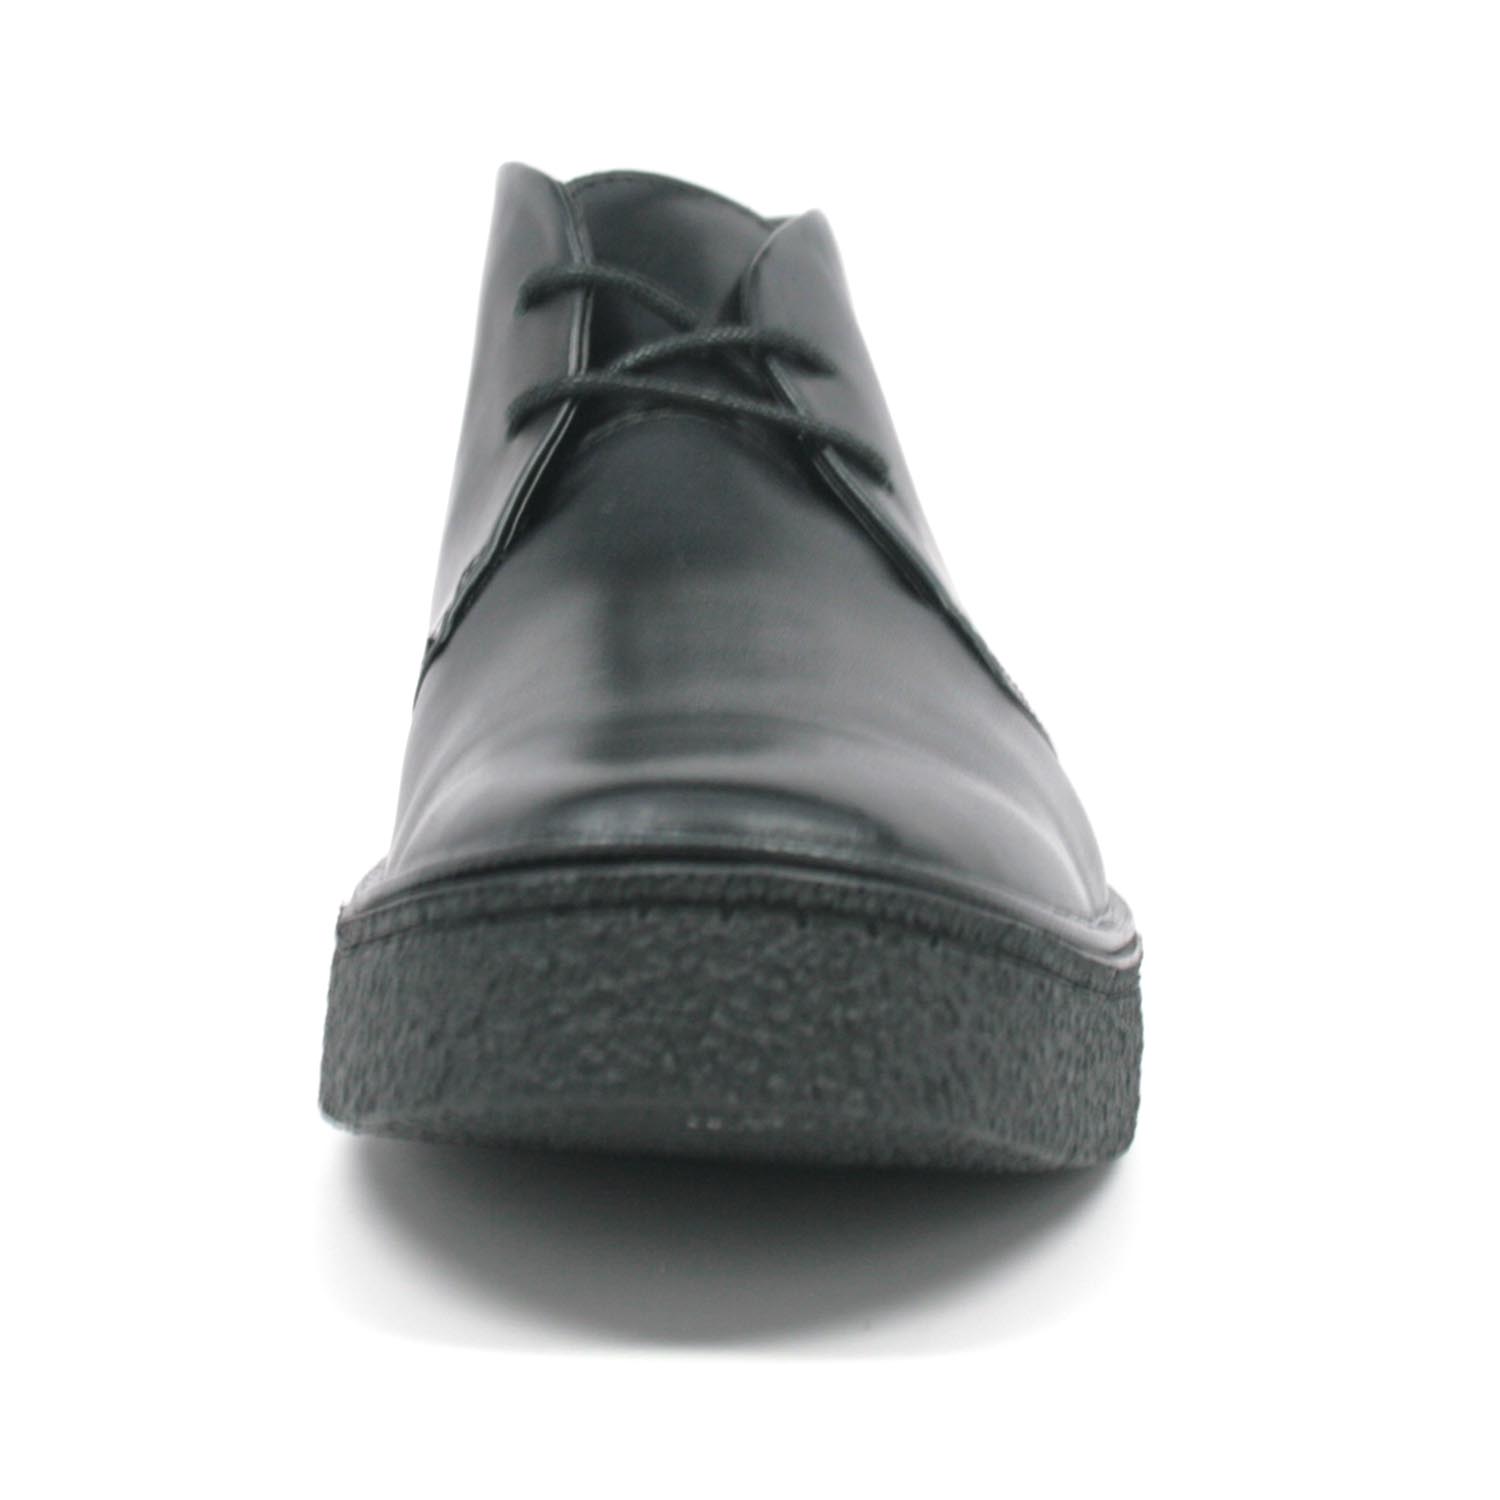 British Walkers Men's Playboy Chukka Boot Black Leather [1226-1] - $99. ...